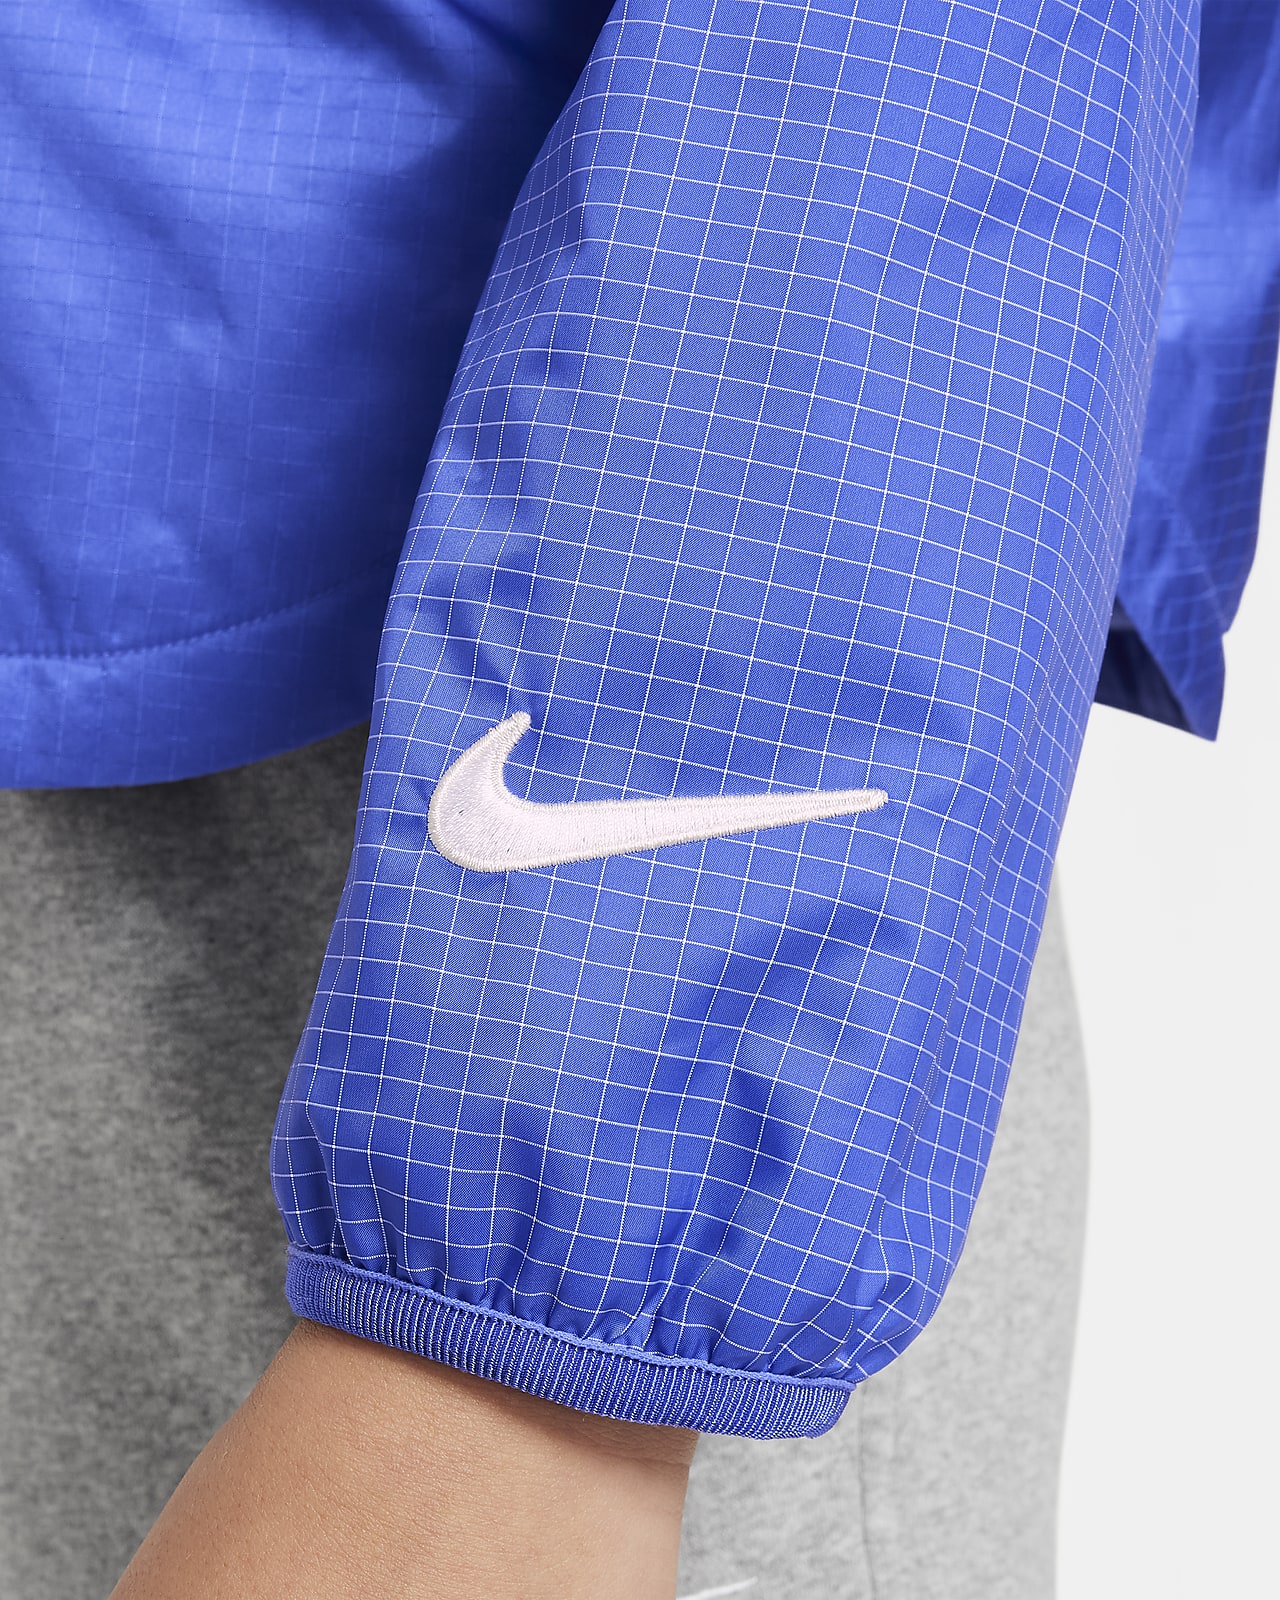 Nike Sportswear Therma-FIT Repel Big Kids' (Girls') Shirt-Jacket.